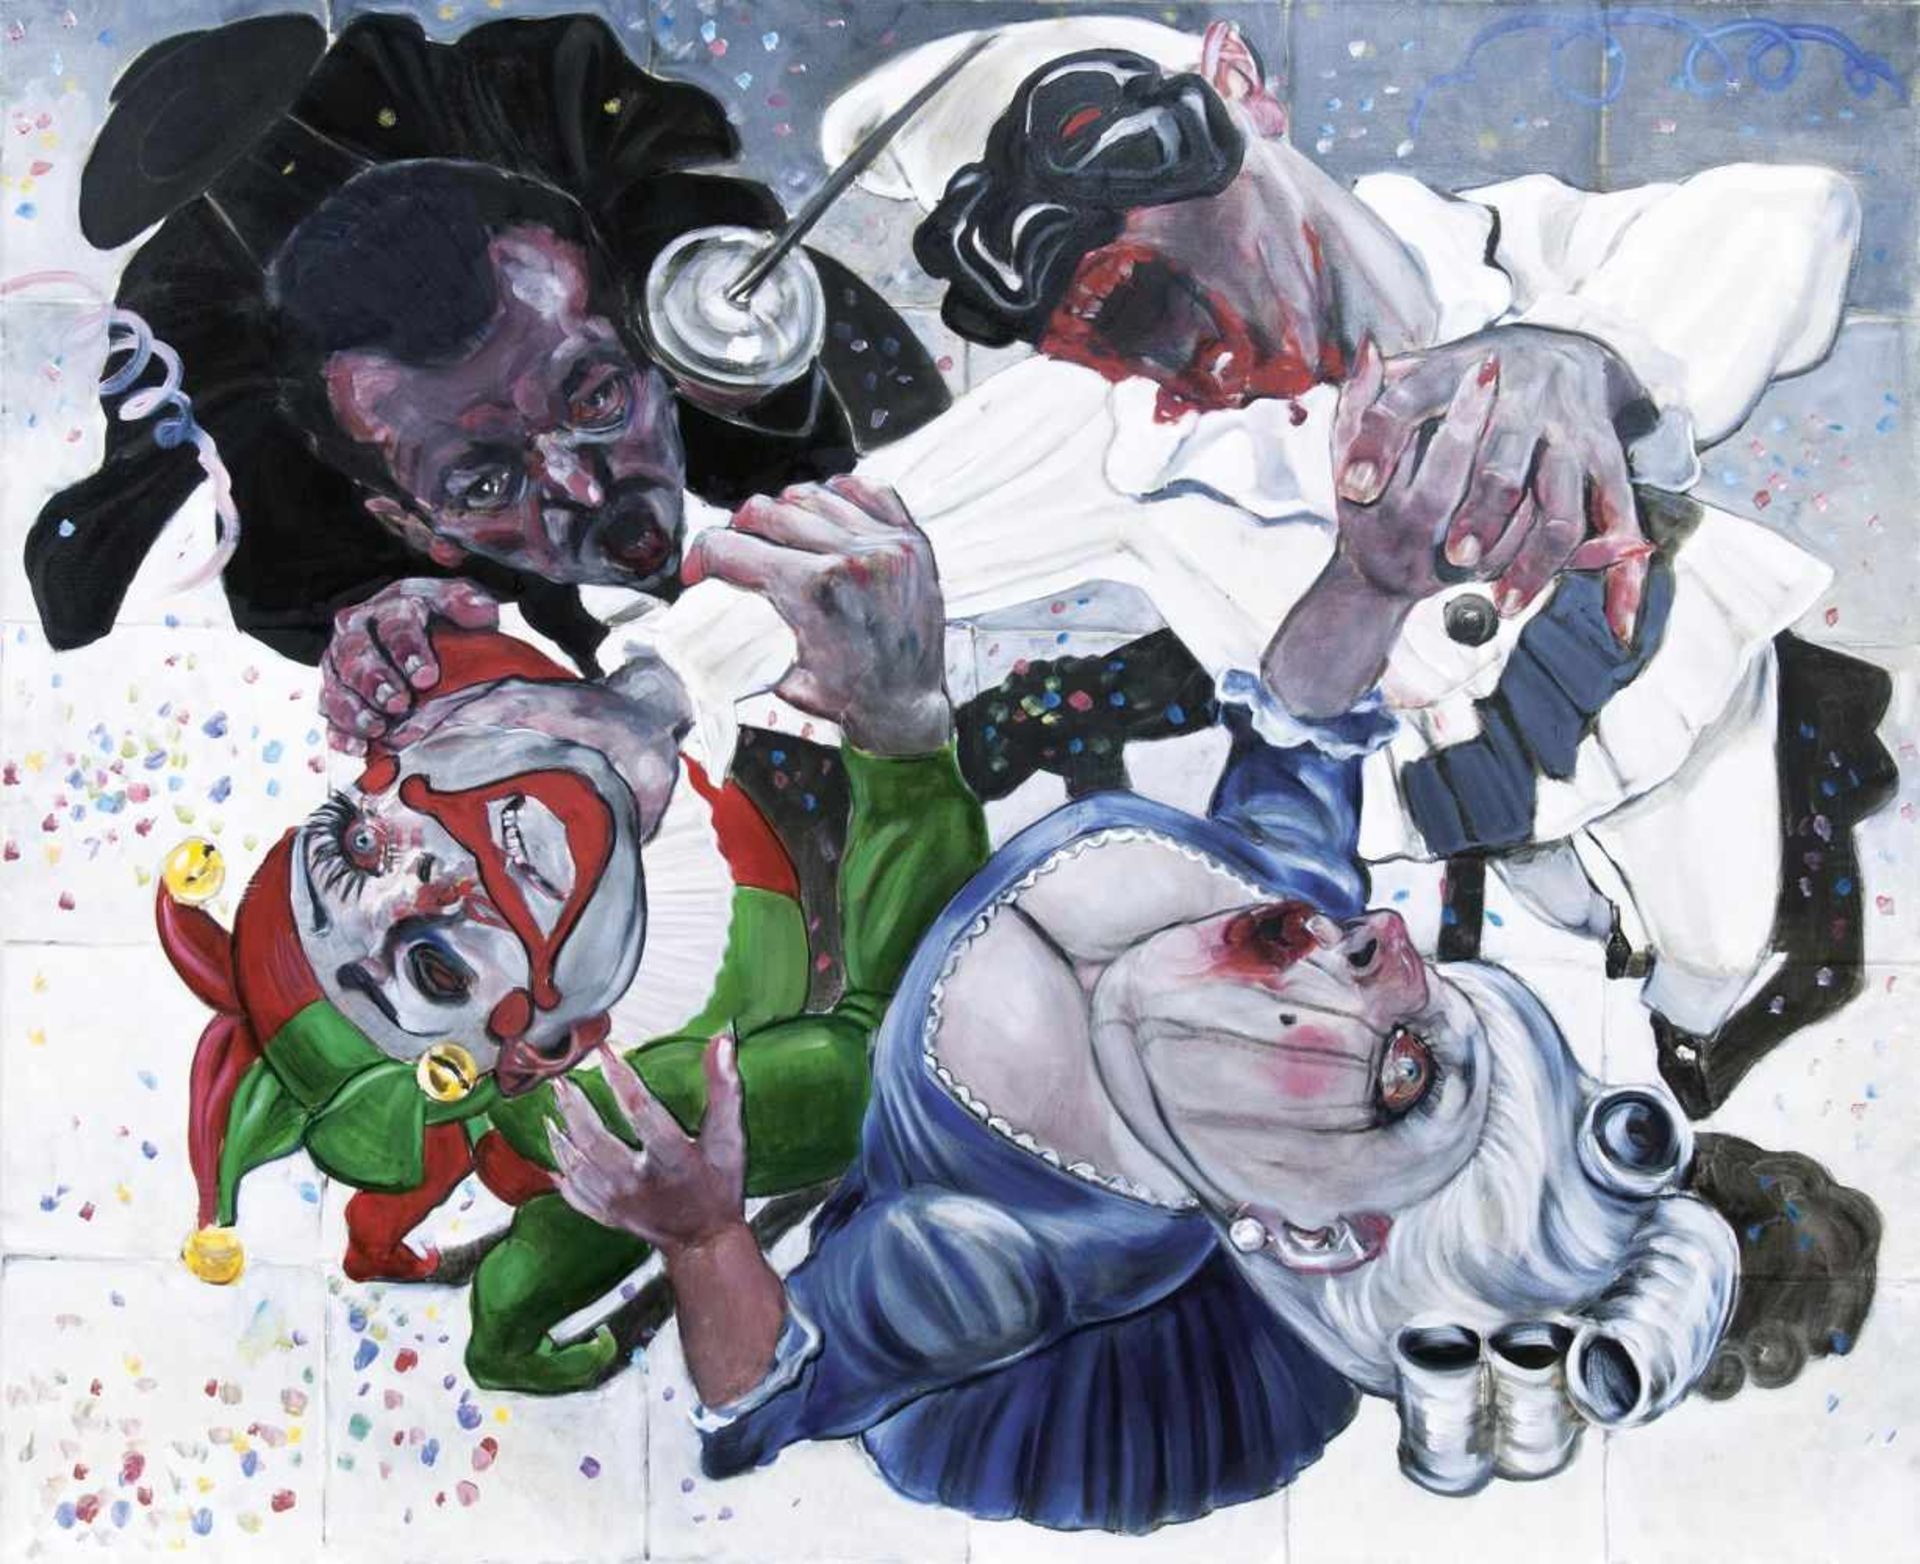 Enrico Robusti(Parma 1956)KarnevalssturmÖl/Lw., 100 x 120 cm, verso sign. u. dat. E. Robusti 2005